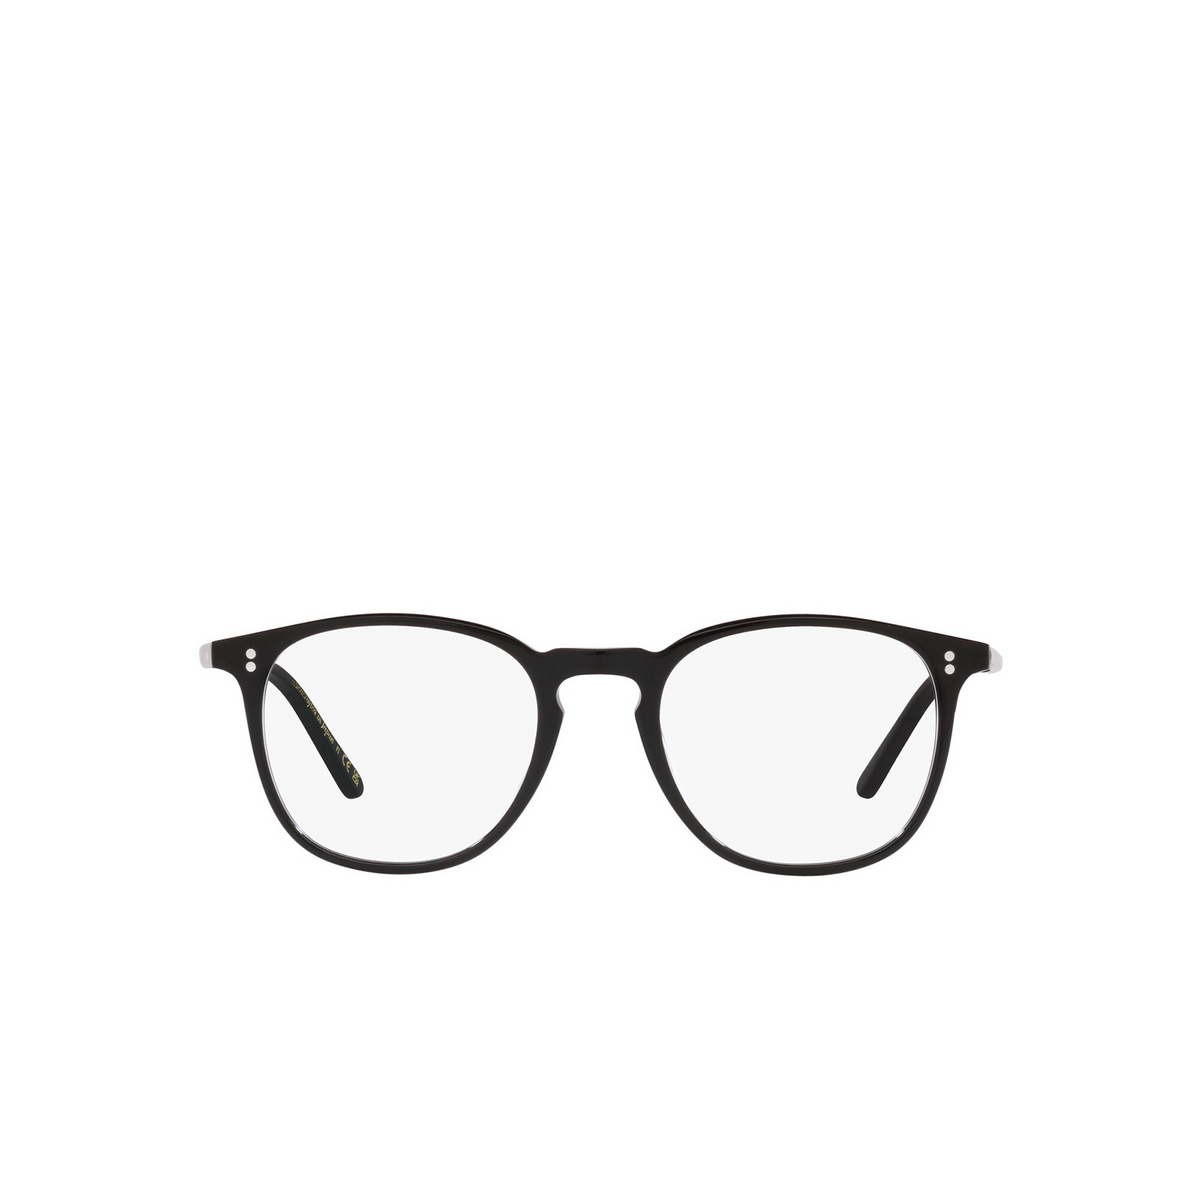 Oliver Peoples FINLEY 1993 Eyeglasses 1731 Black - front view